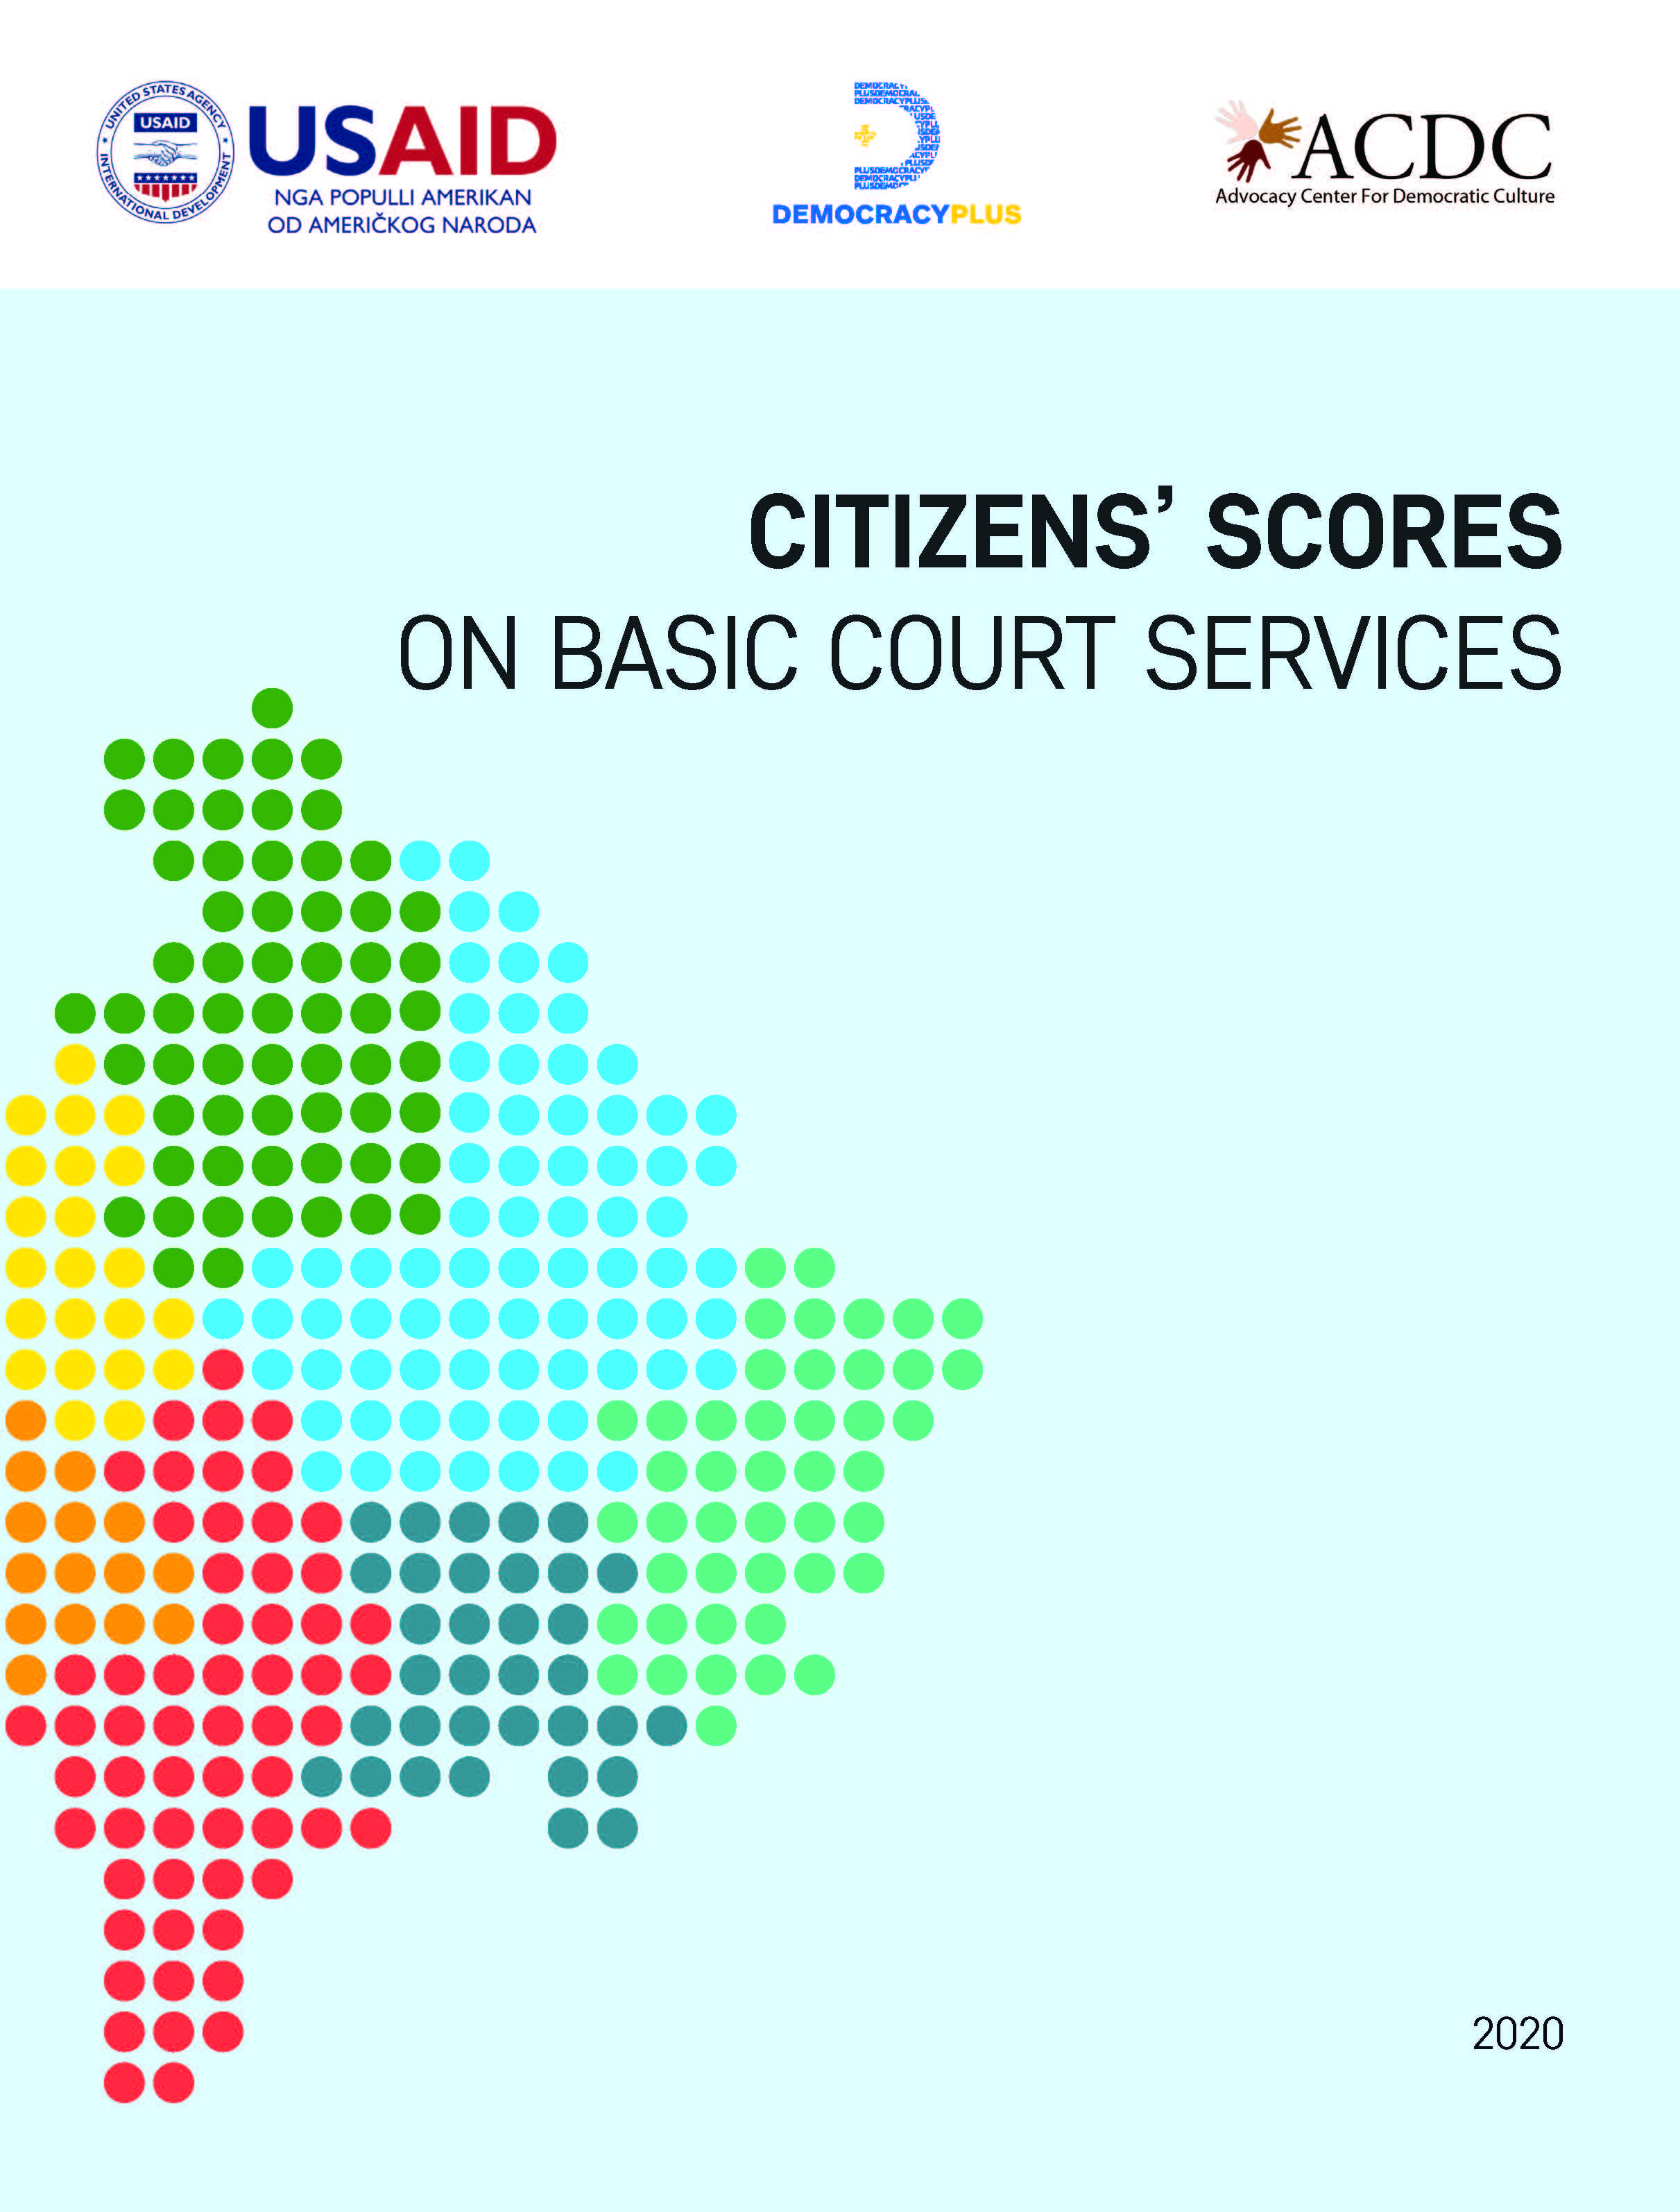 Citizens’ Scores on Basic Court Services